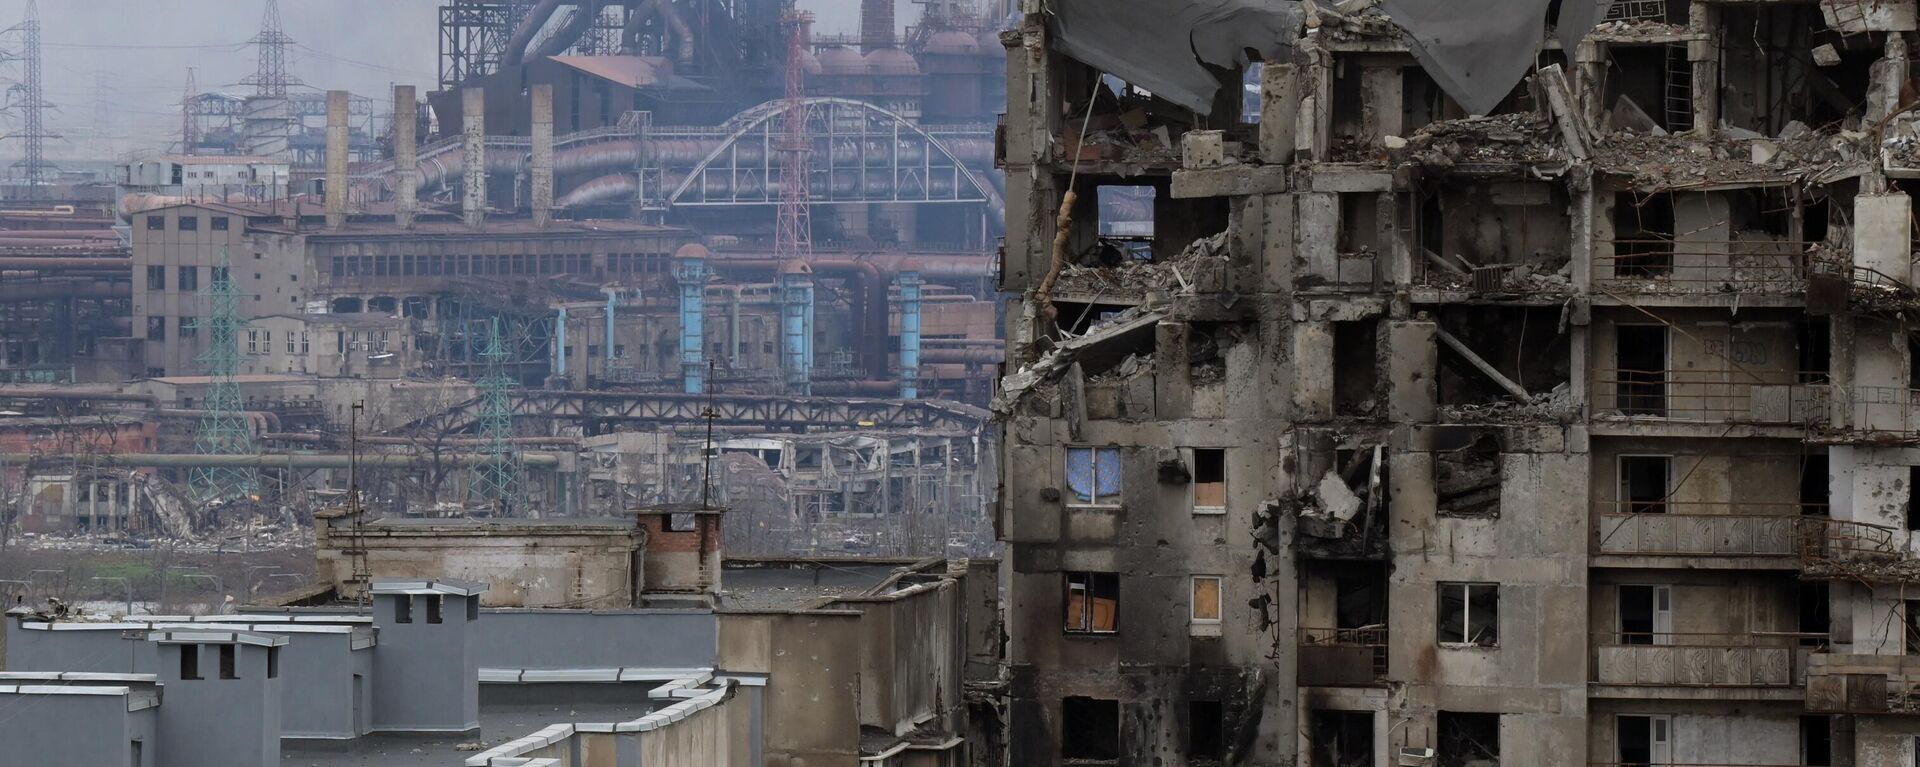 Un edificio destruido cerca de la planta metalúrgica Azovstal  - Sputnik Mundo, 1920, 17.04.2022